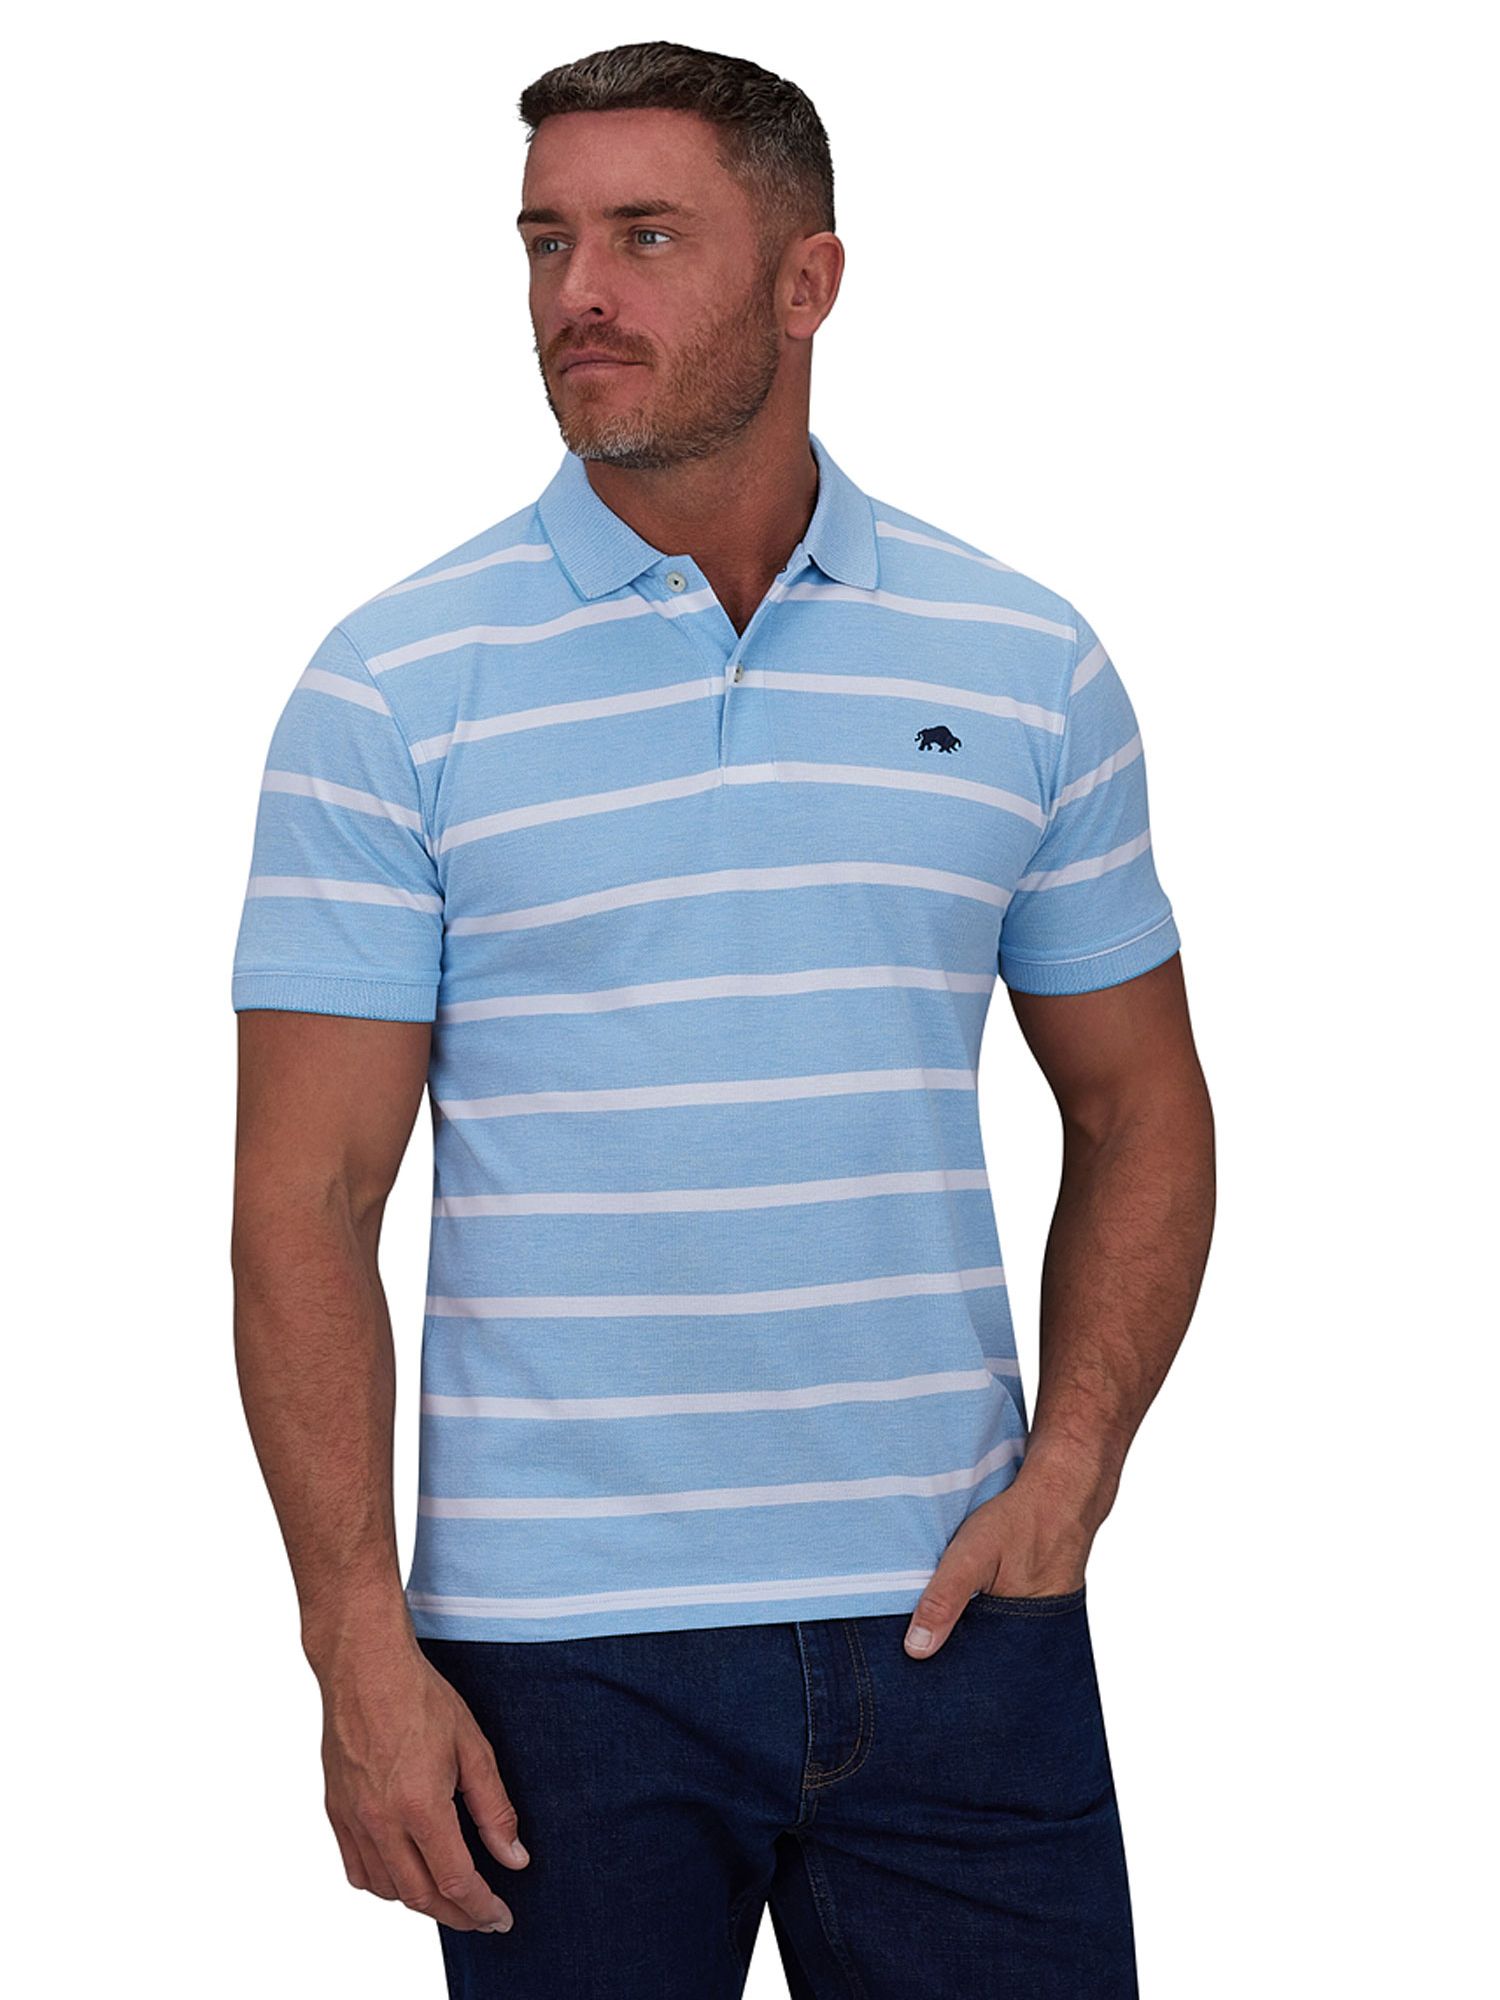 Buy Raging Bull Birdseye Stripe Polo Shirt, Mid Blue Online at johnlewis.com